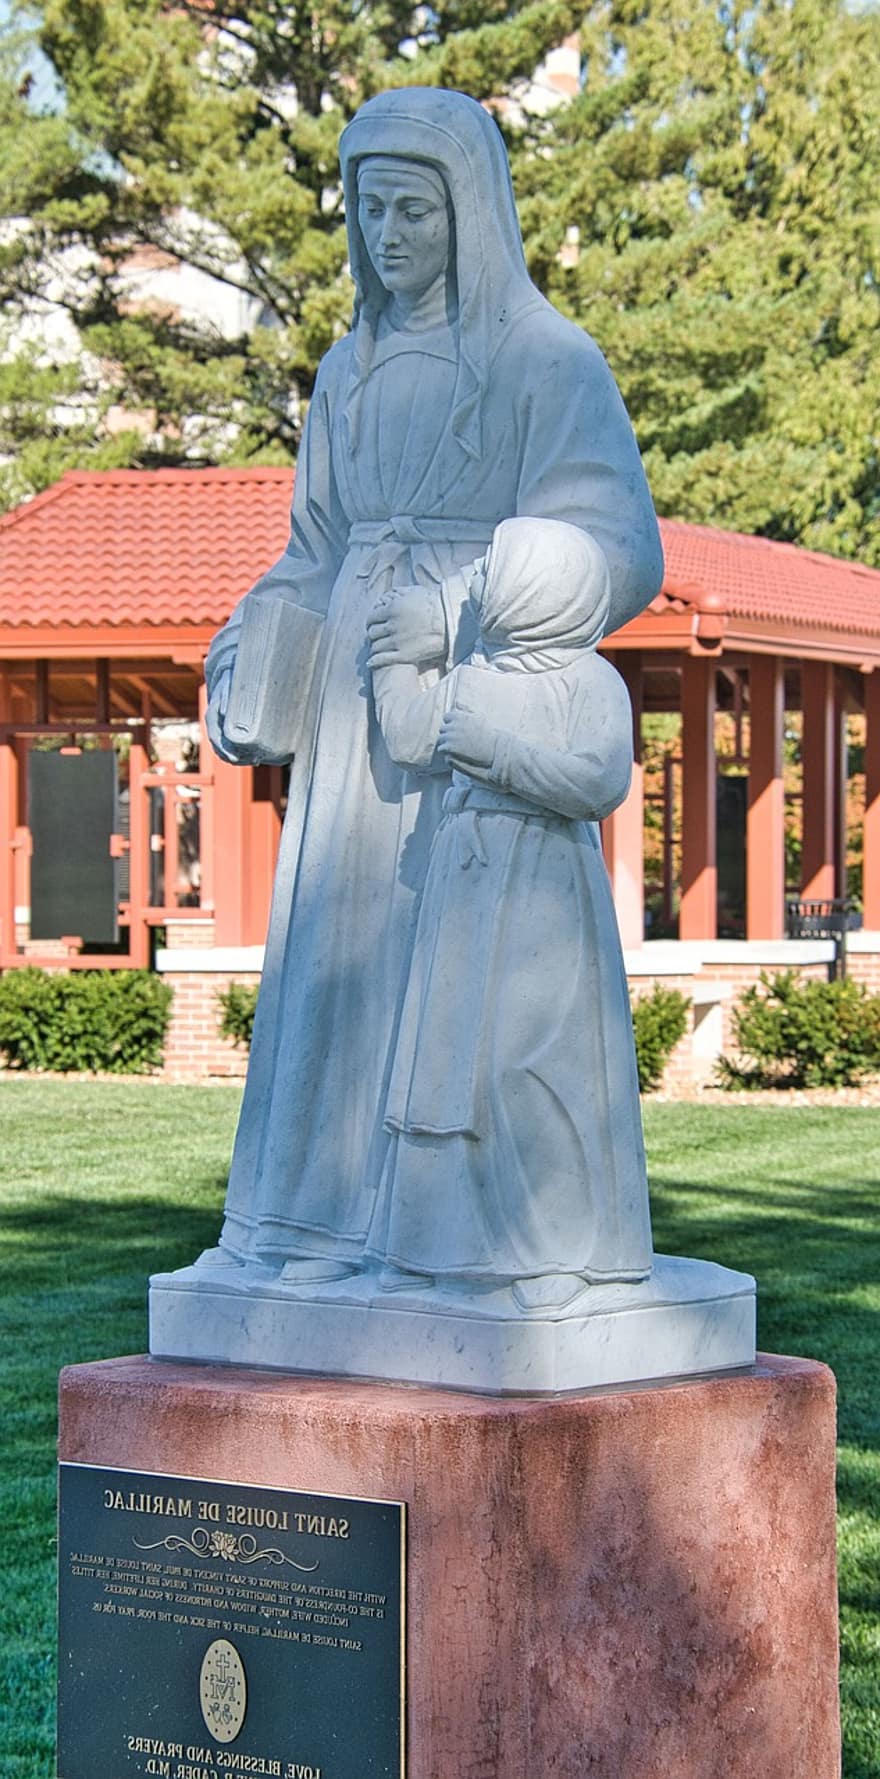 Saint Statyer, Sankt skulpturer, religion, religiösa statyer